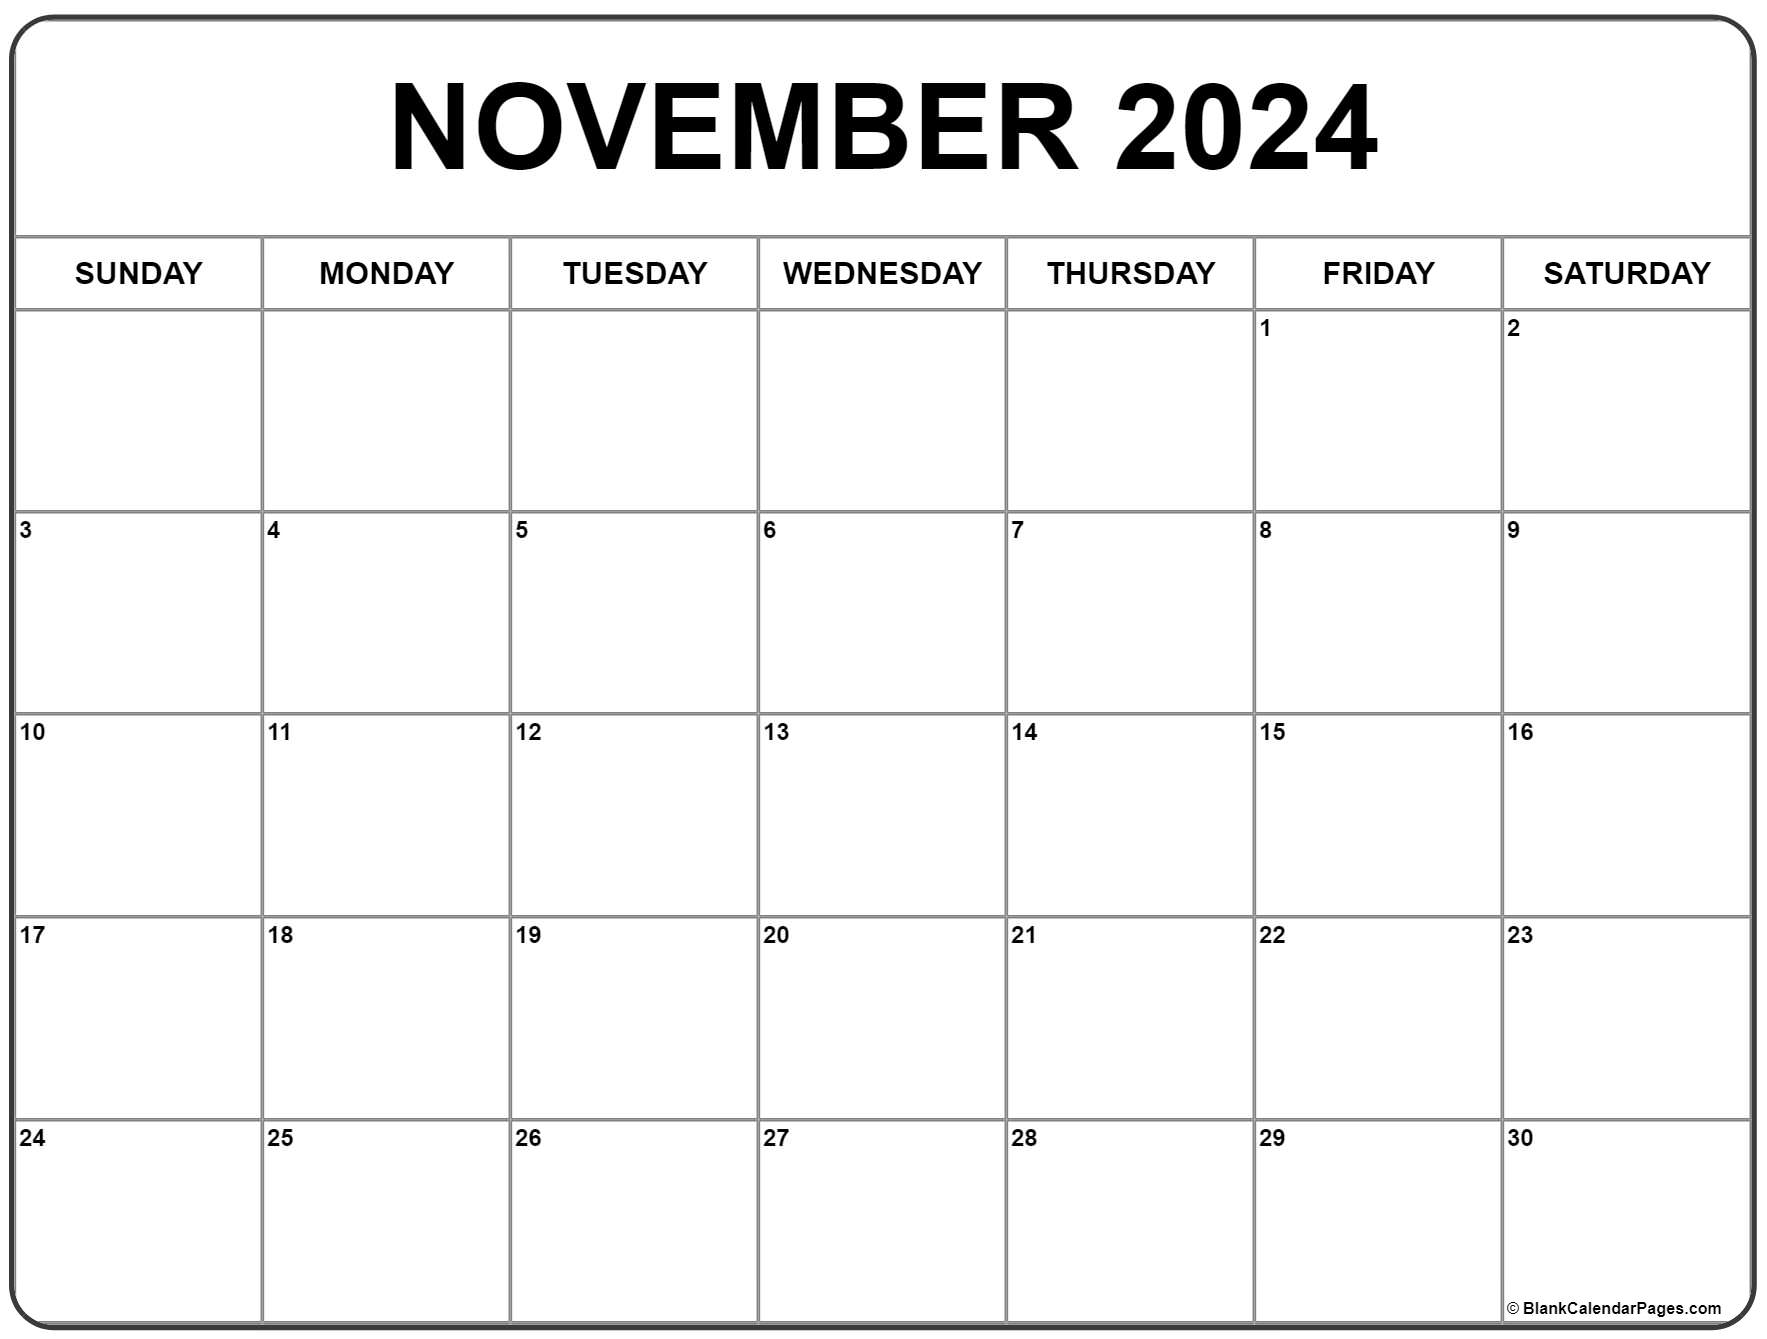 Free Calendar November 2022 November 2022 Calendar | Free Printable Calendar Templates